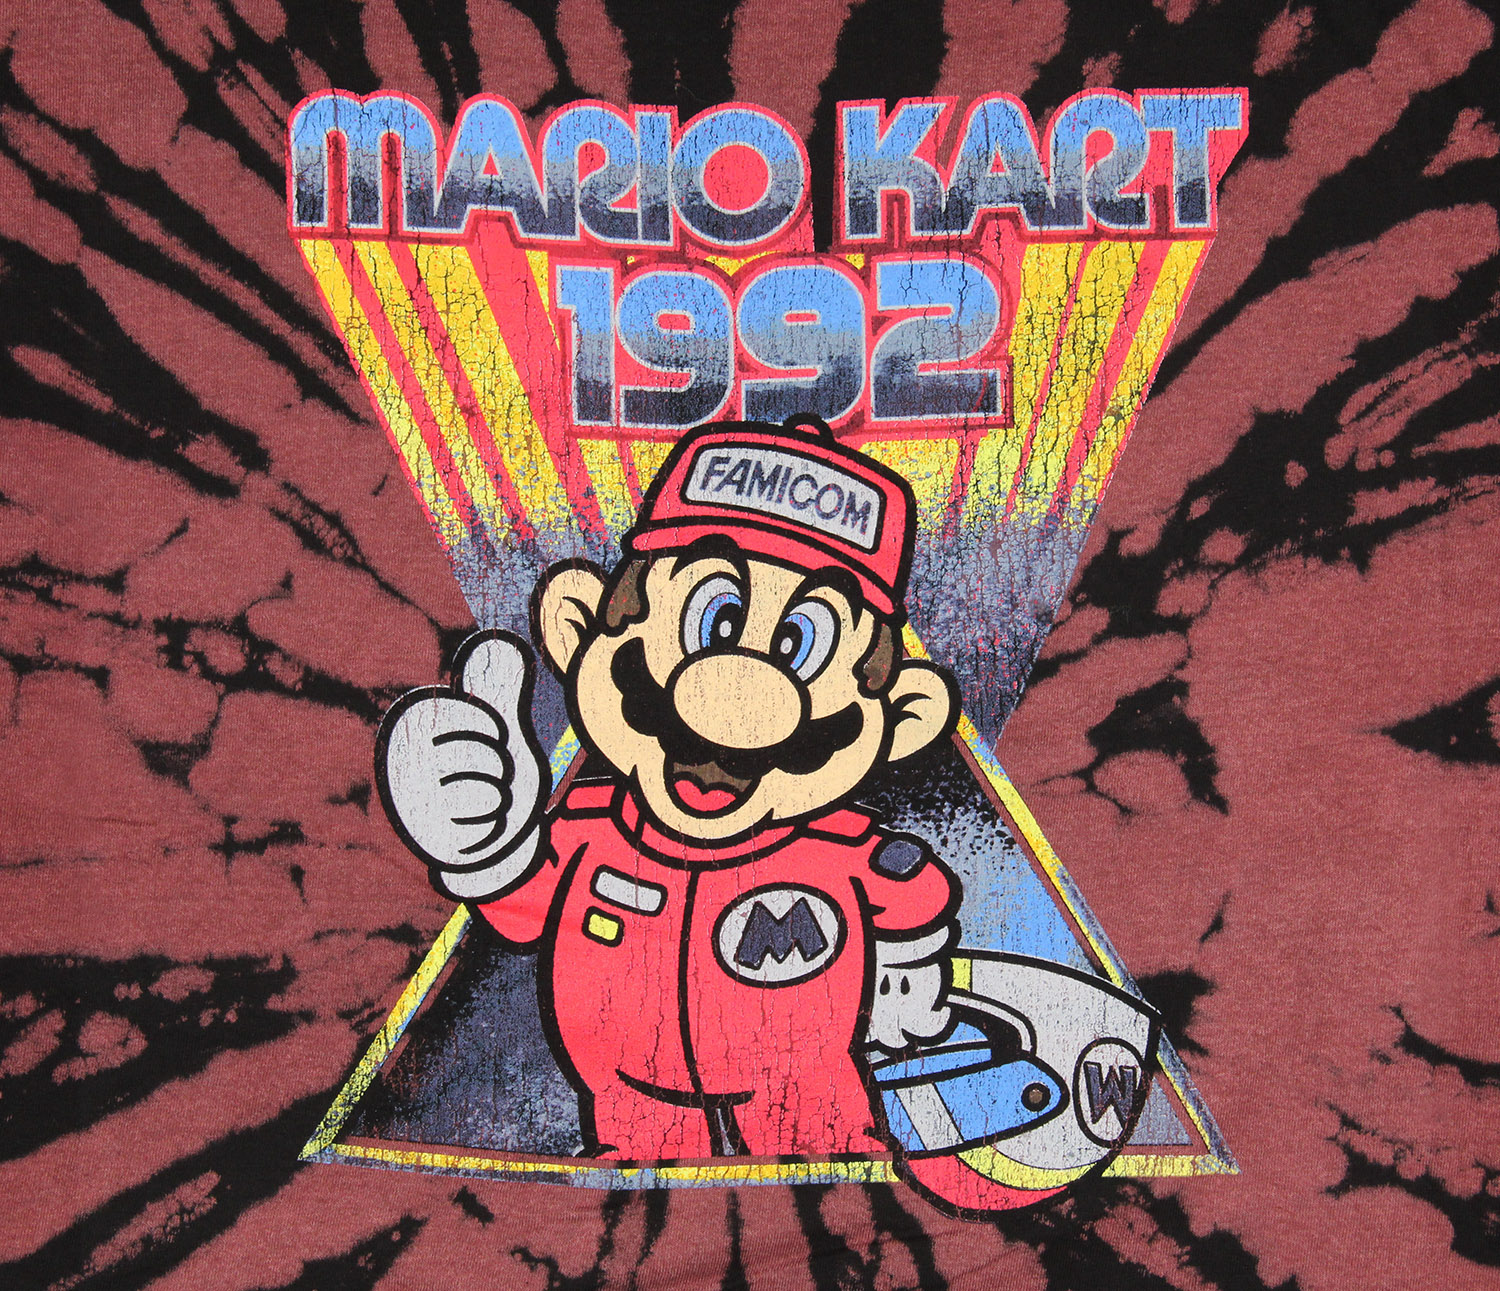 Seven Times Six Super Mario Men's Distressed Mario Kart Racing 1992 Tie Dye T-Shirt